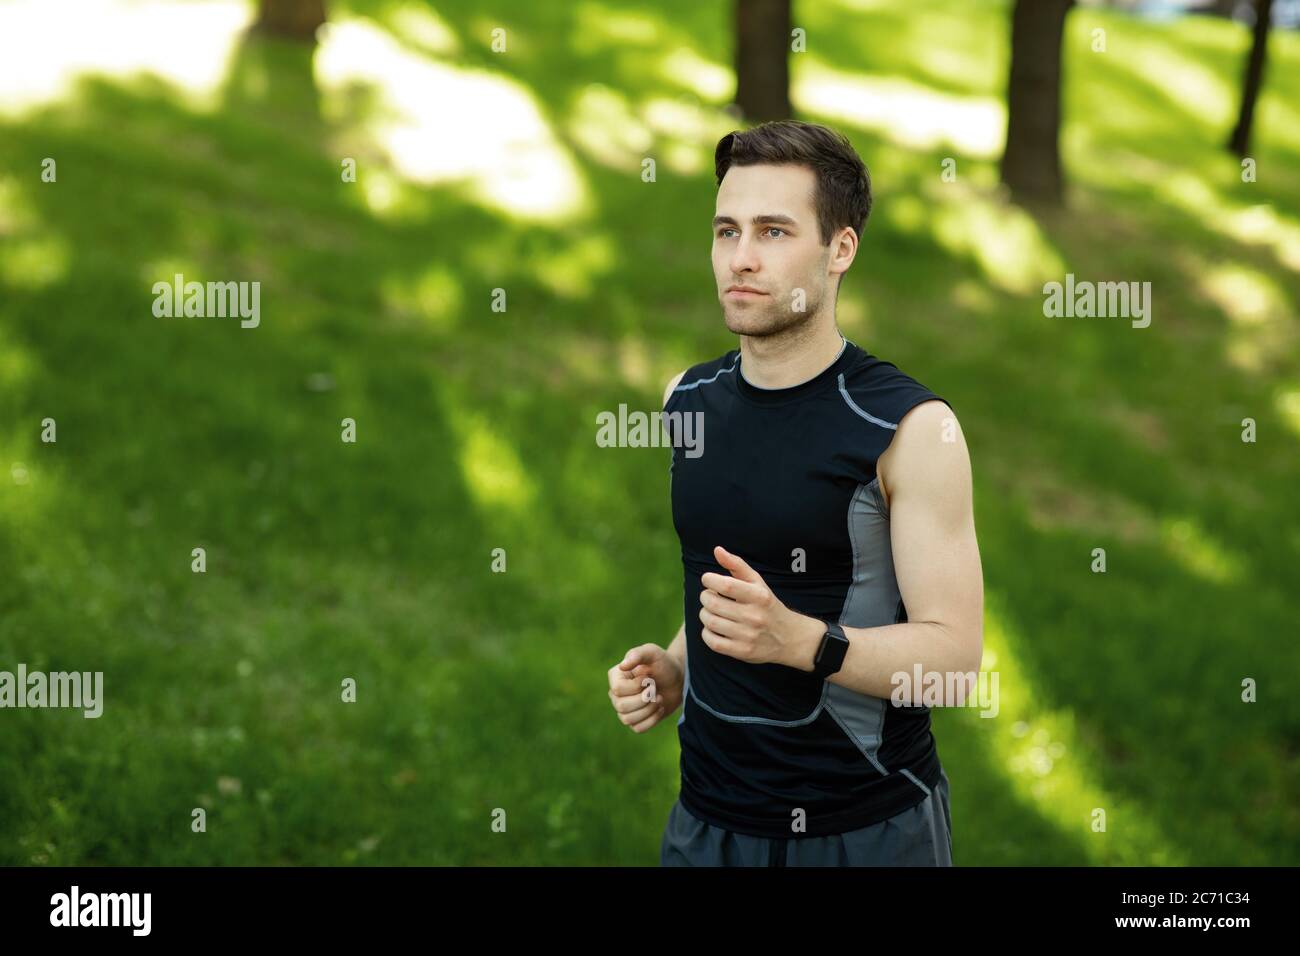 Summer sport. Guy in sportswear with fitness tracker runs in park Stock Photo